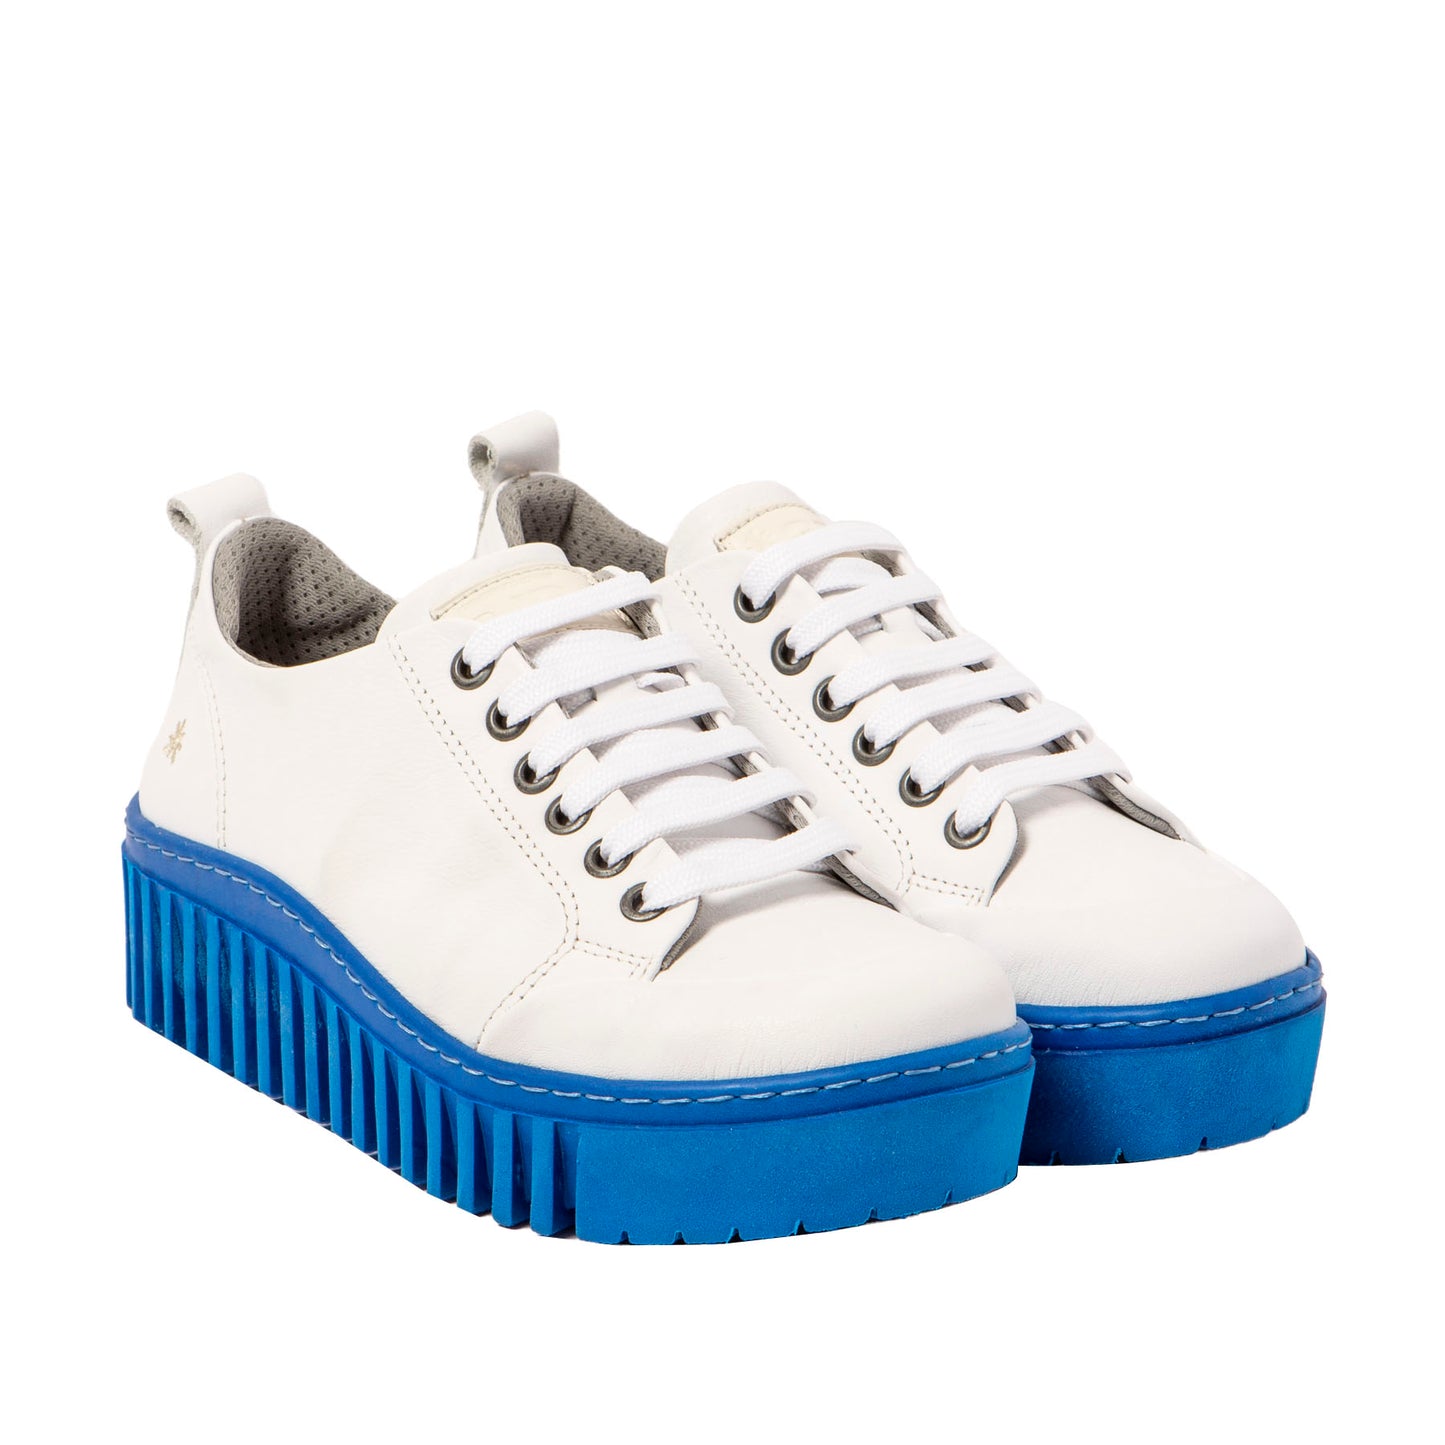 Art 1535 nappa white and blue shoe